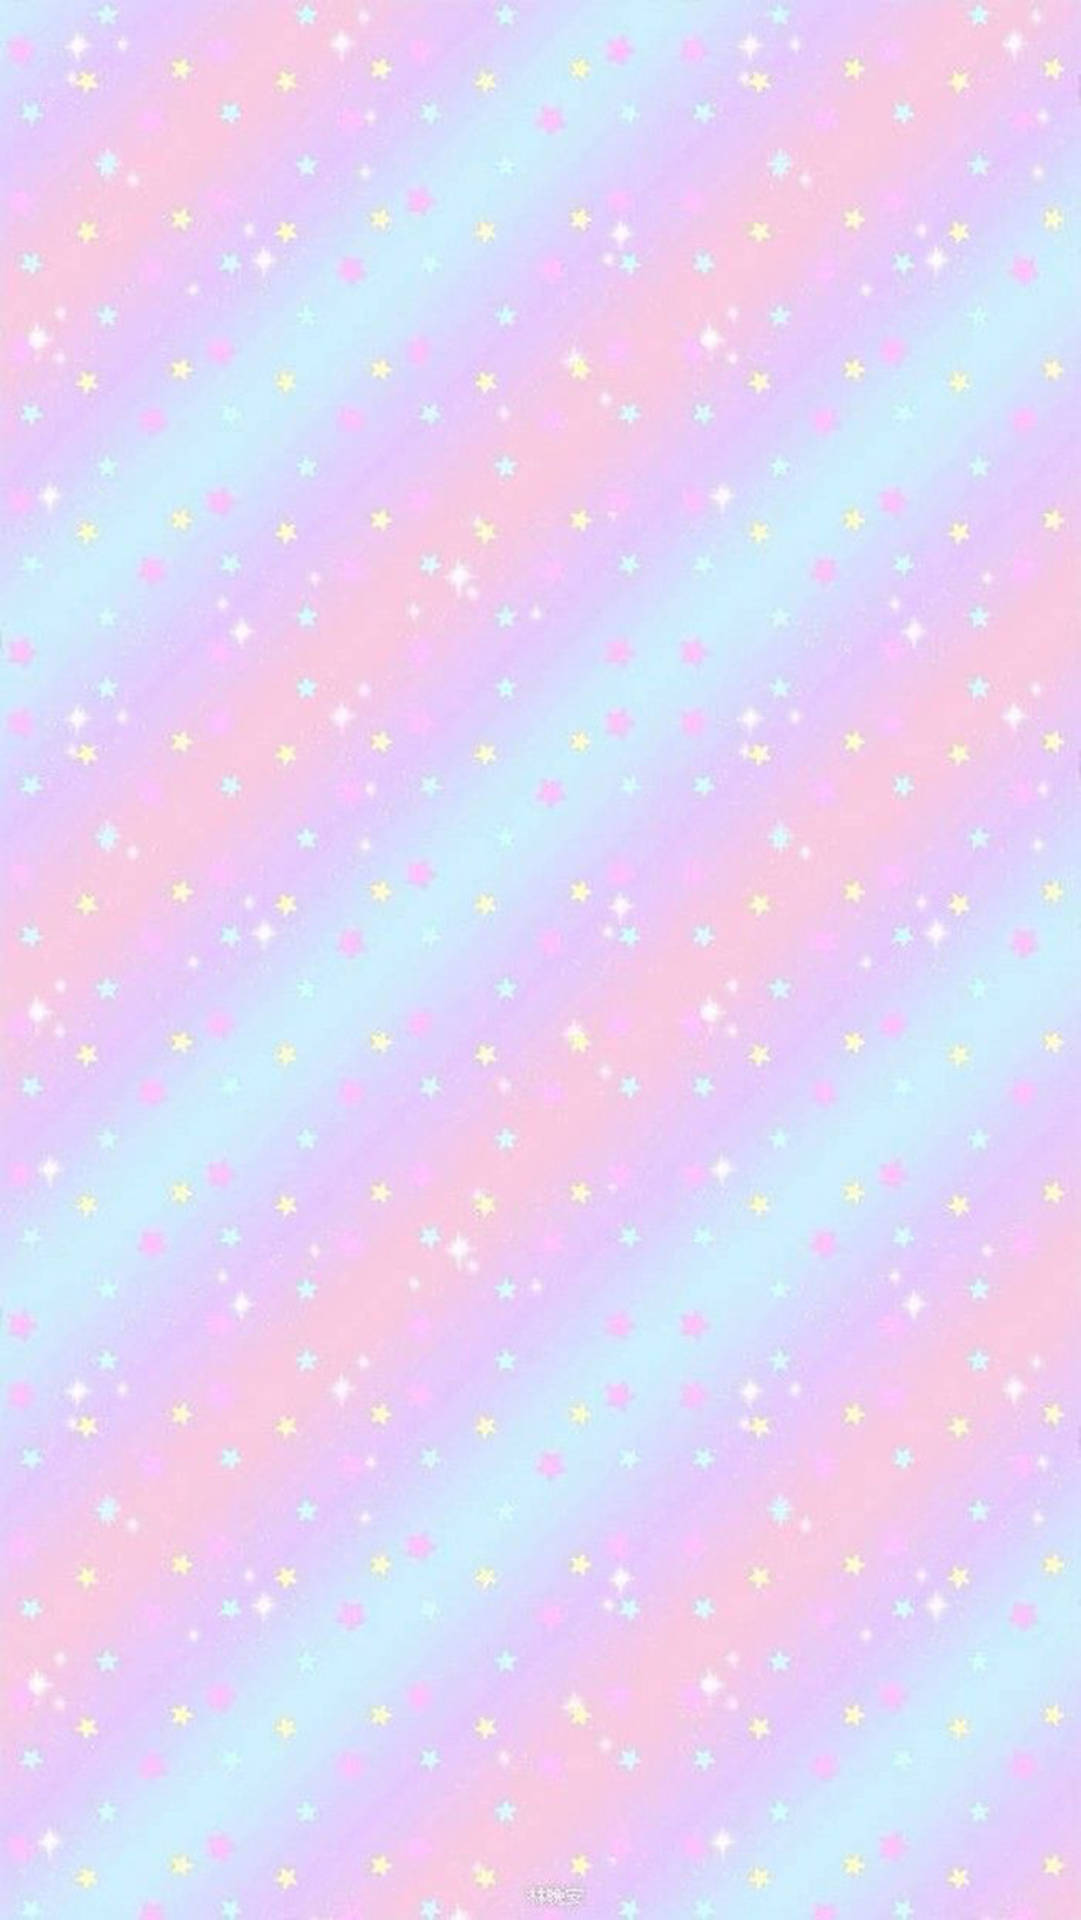 Whimsical Diagonal Pattern in Cute Pastel Colors Wallpaper